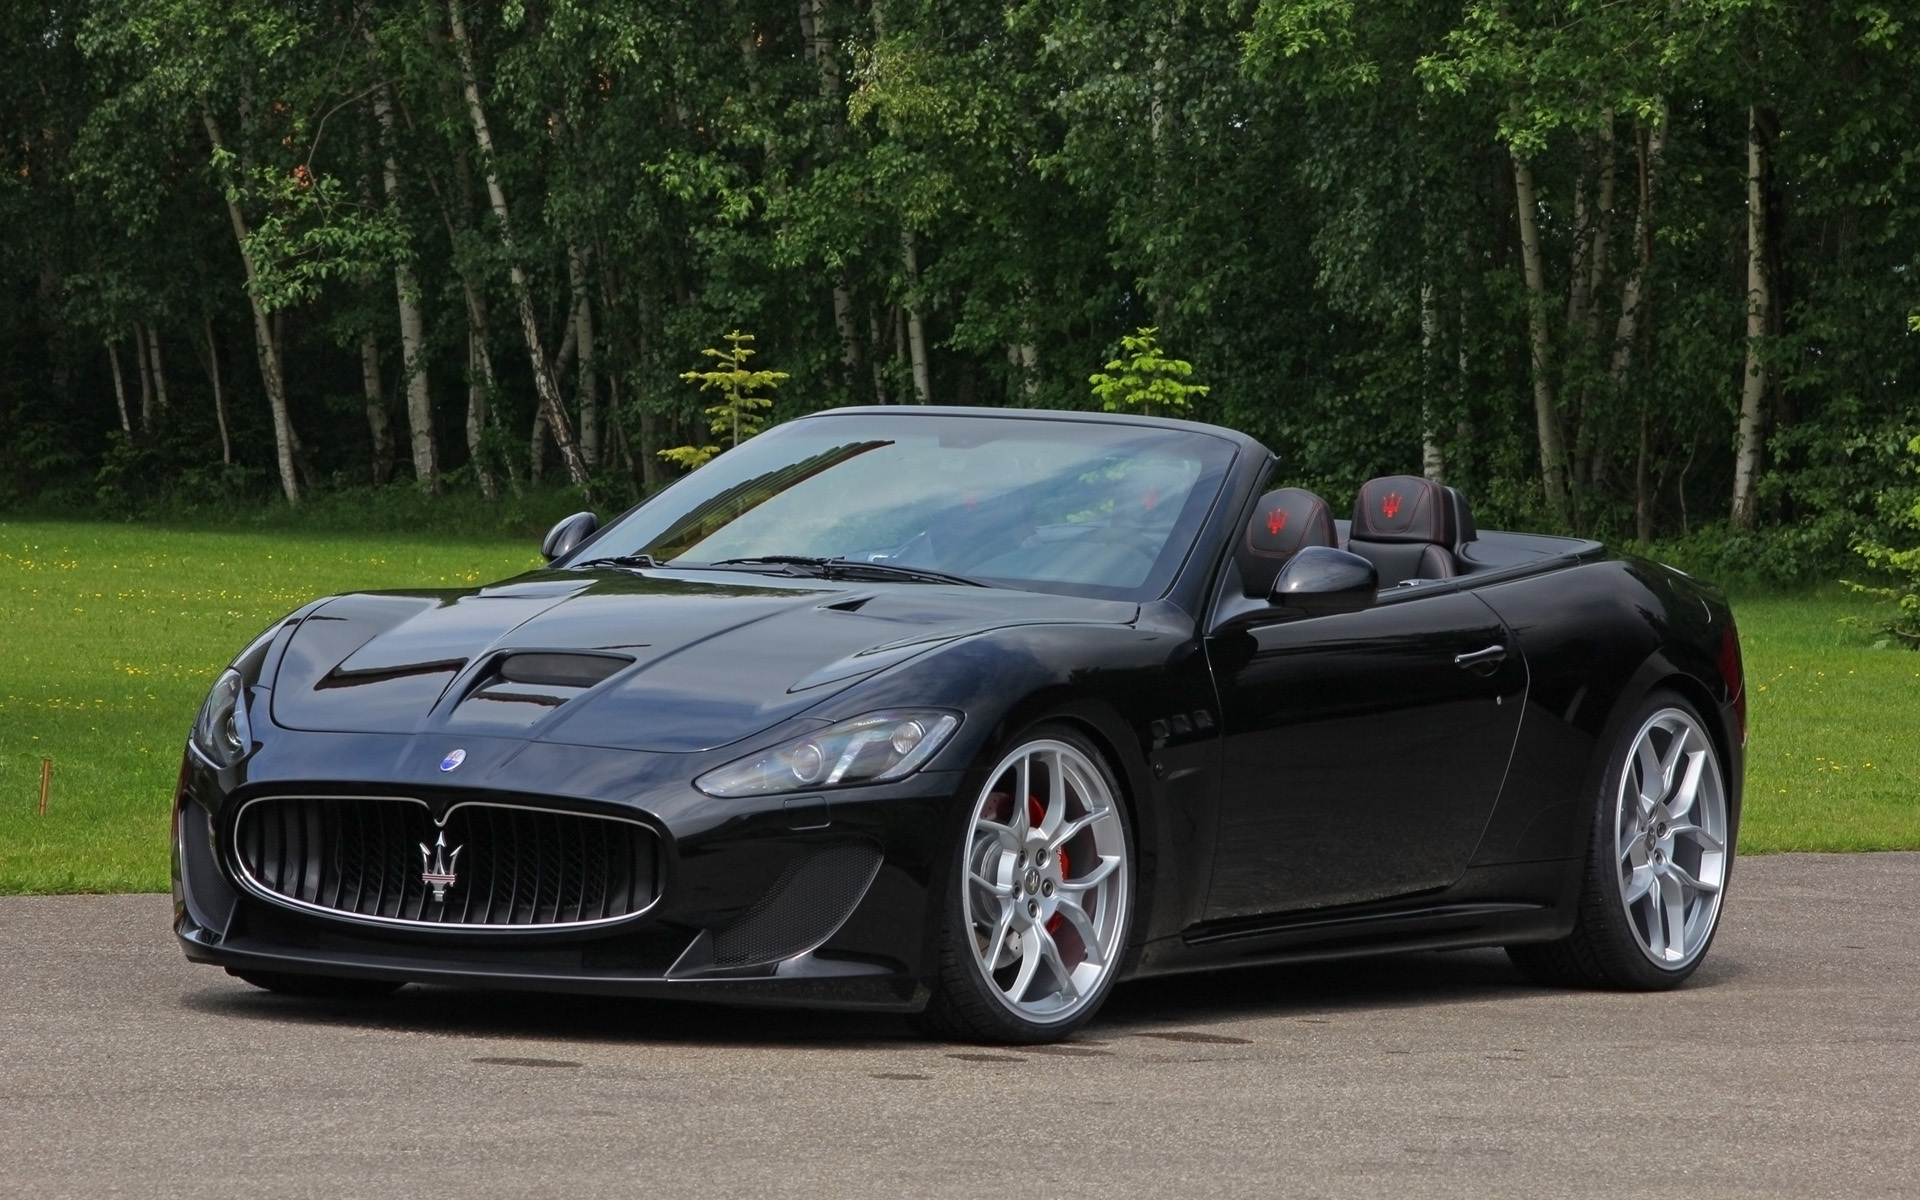 Descarga gratuita de fondo de pantalla para móvil de Transporte, Maserati, Automóvil.